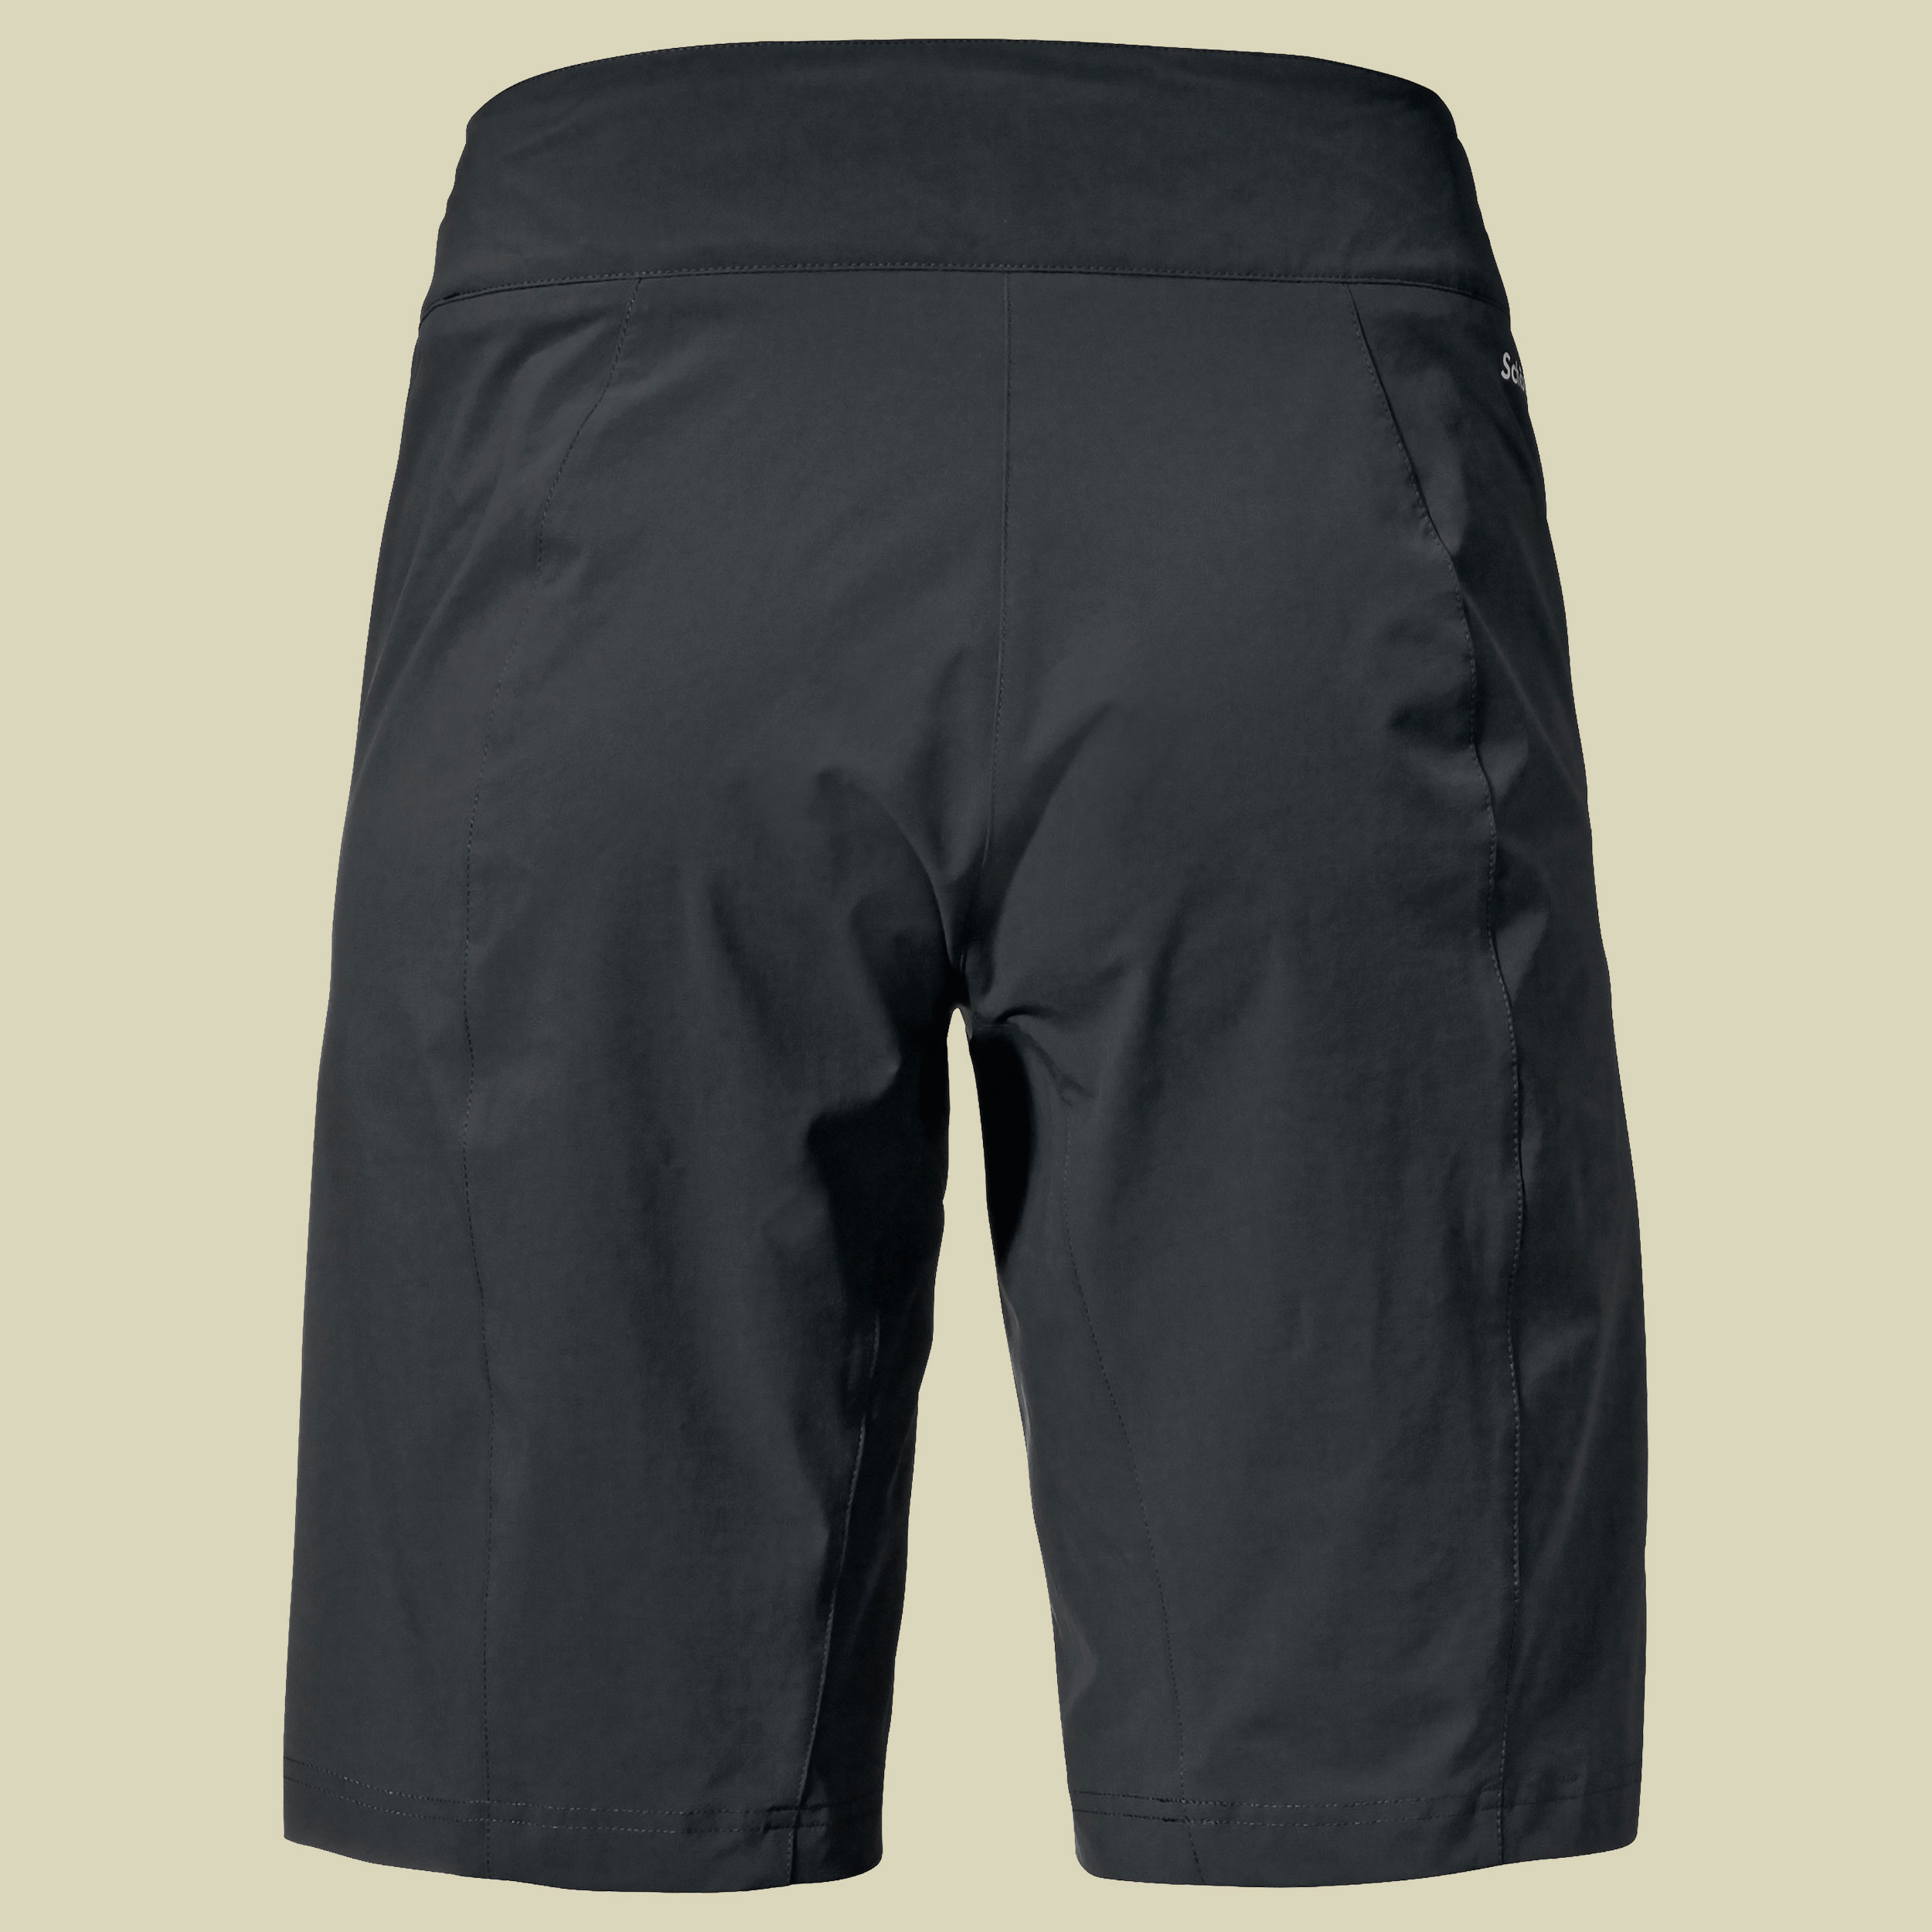 Danube Shorts Women Größe 42 Farbe black